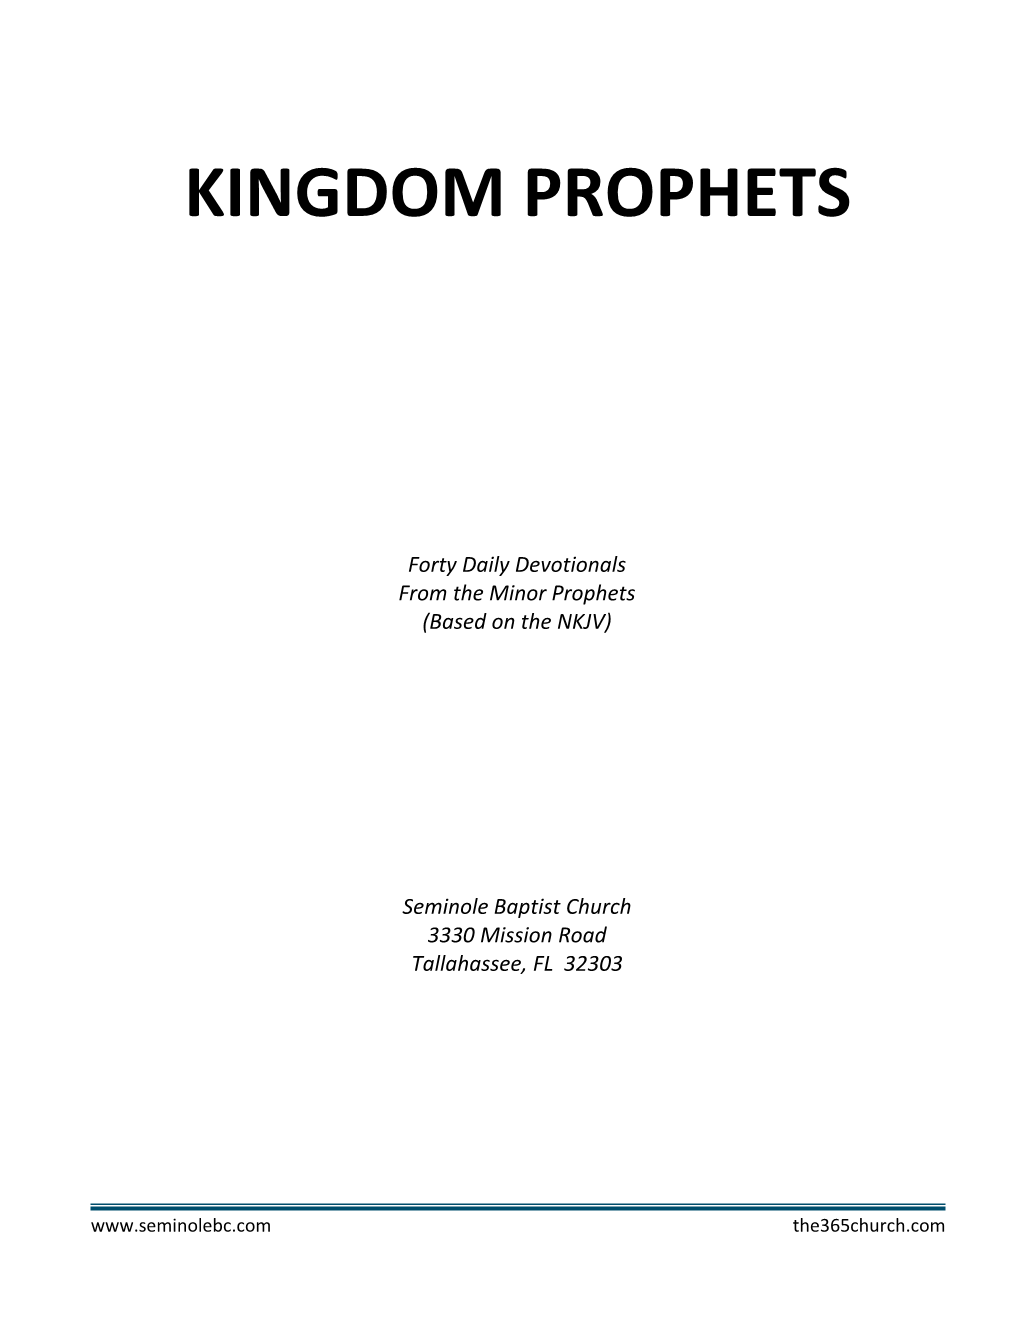 Kingdom Prophets